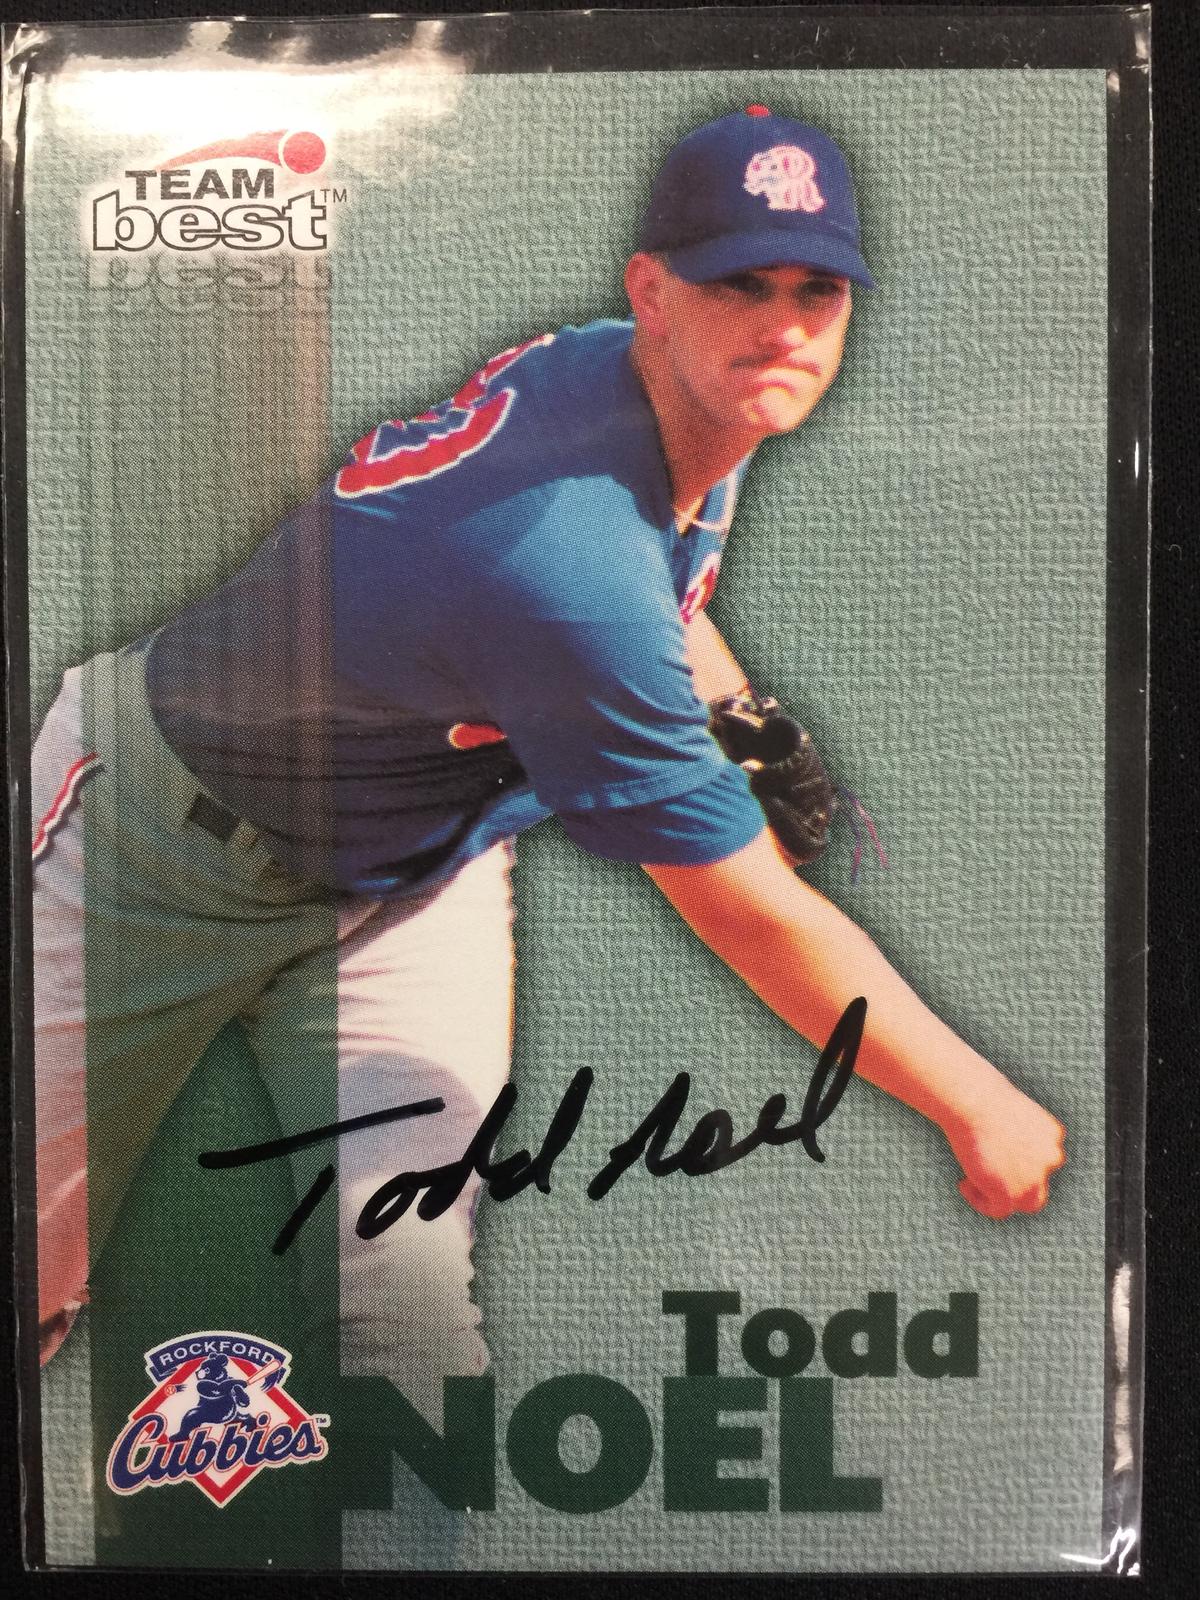 1999 Best Todd Noel Cubs Autograph Card